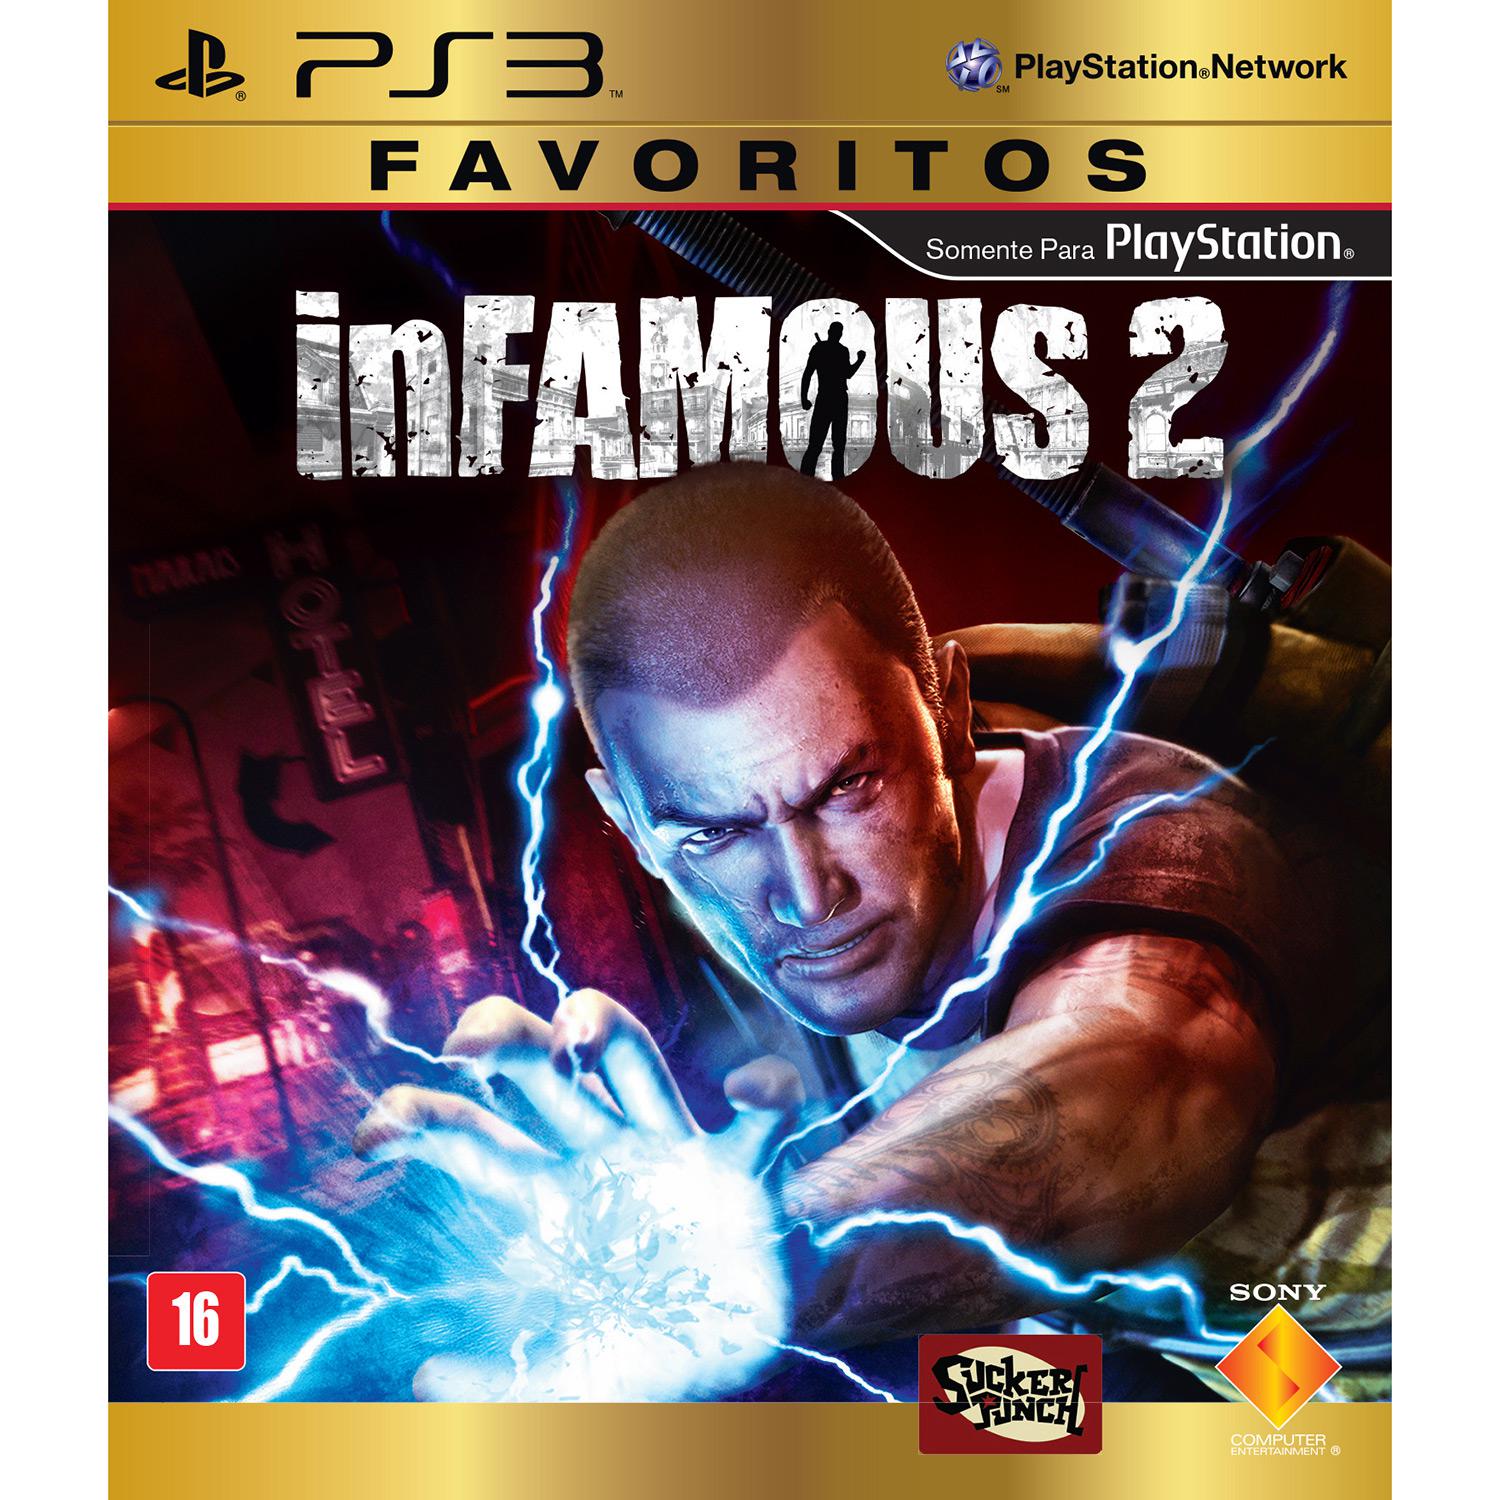 Game Infamous 2 - Favoritos - PS3 é bom? Vale a pena?